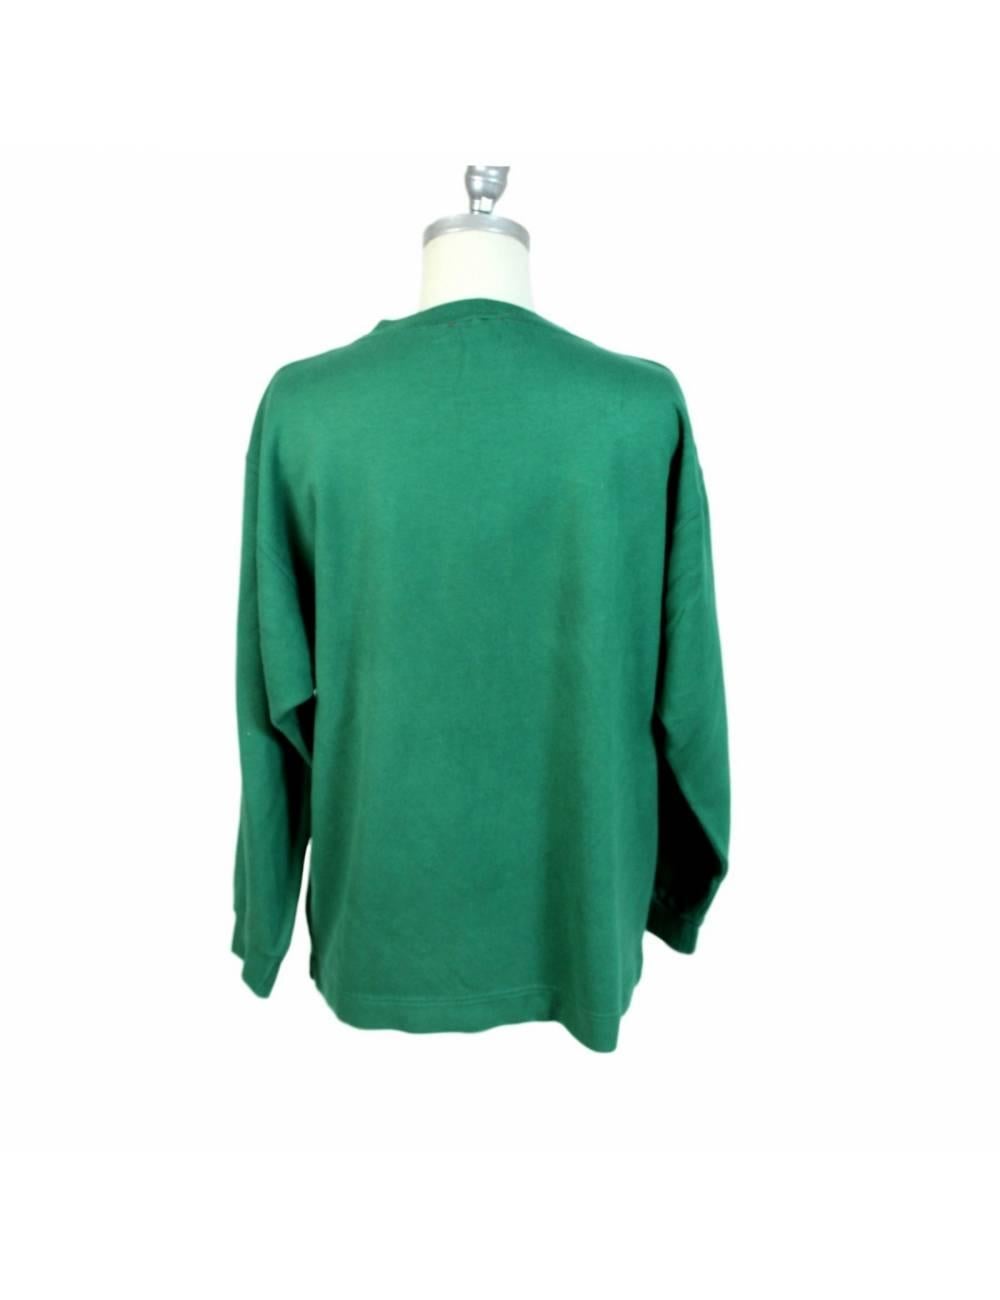 green vintage sweater